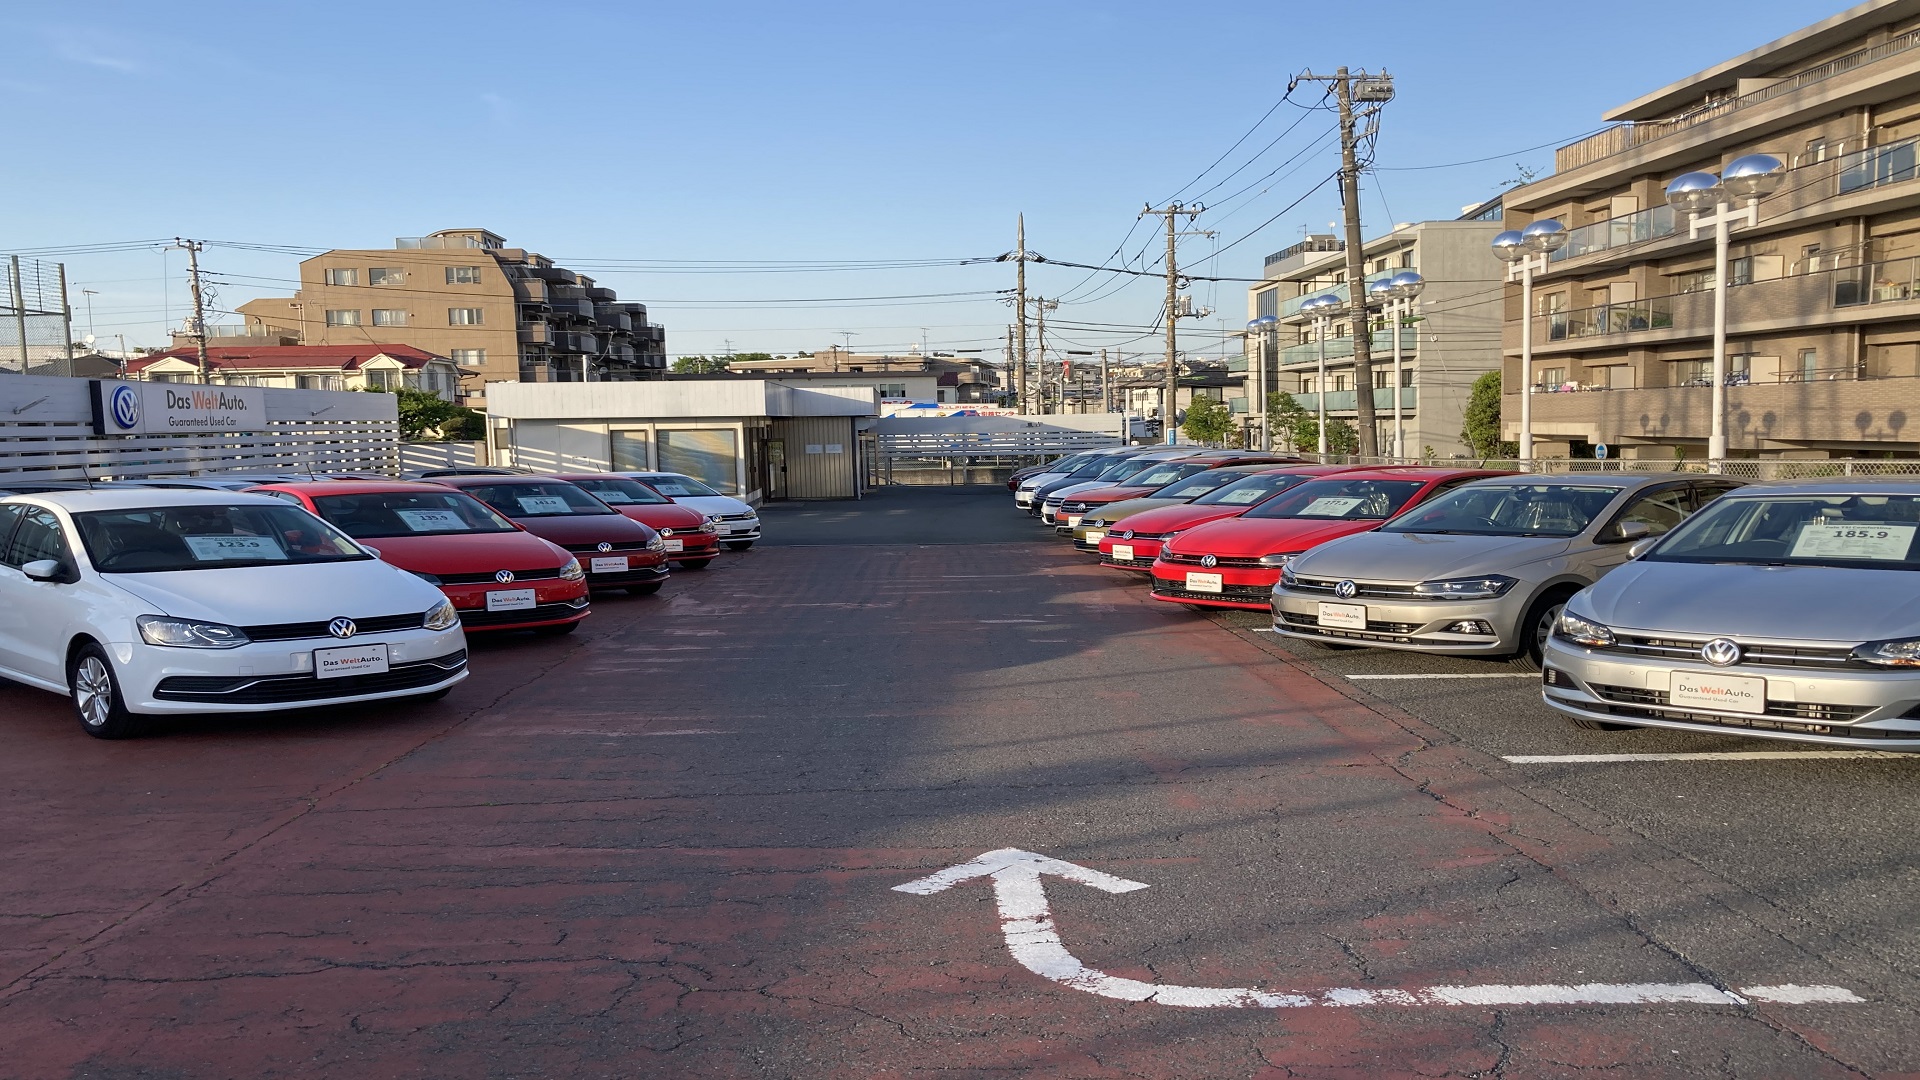 Top Volkswagen世田谷 認定中古車センター Volkswagen Setagaya Guaranteed Used Car Center